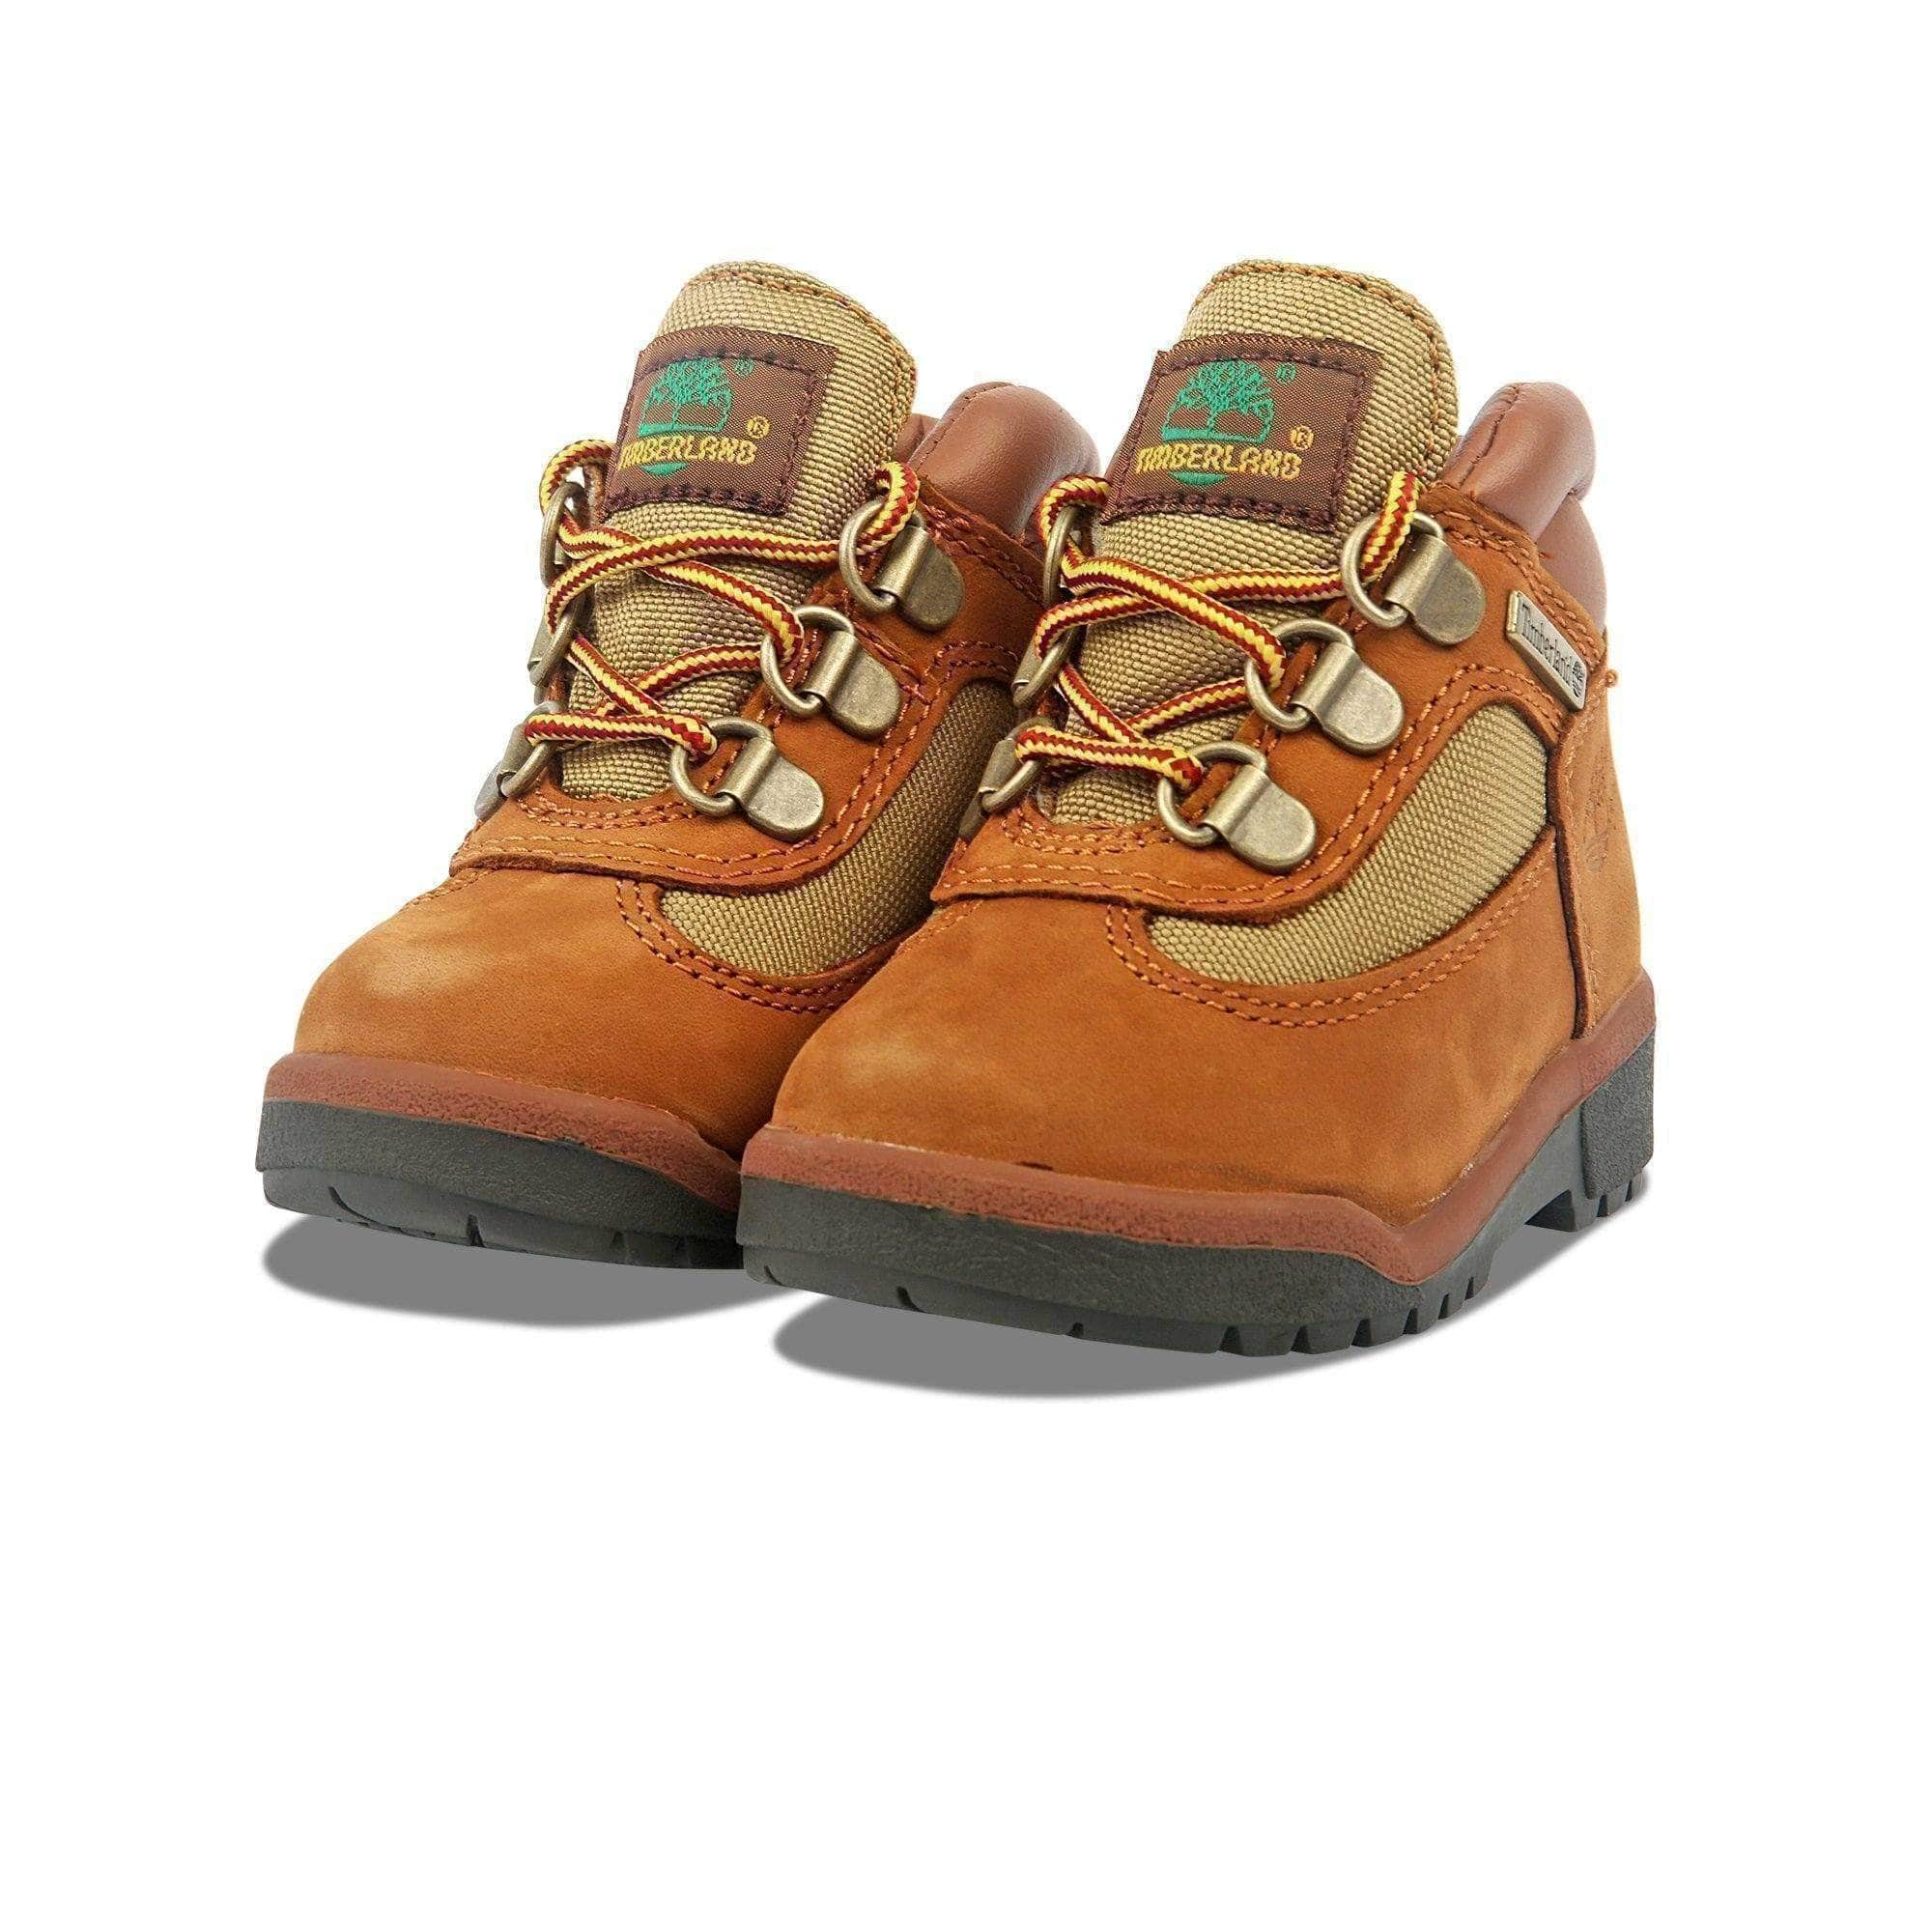 Timberland Field Boot - Toddler